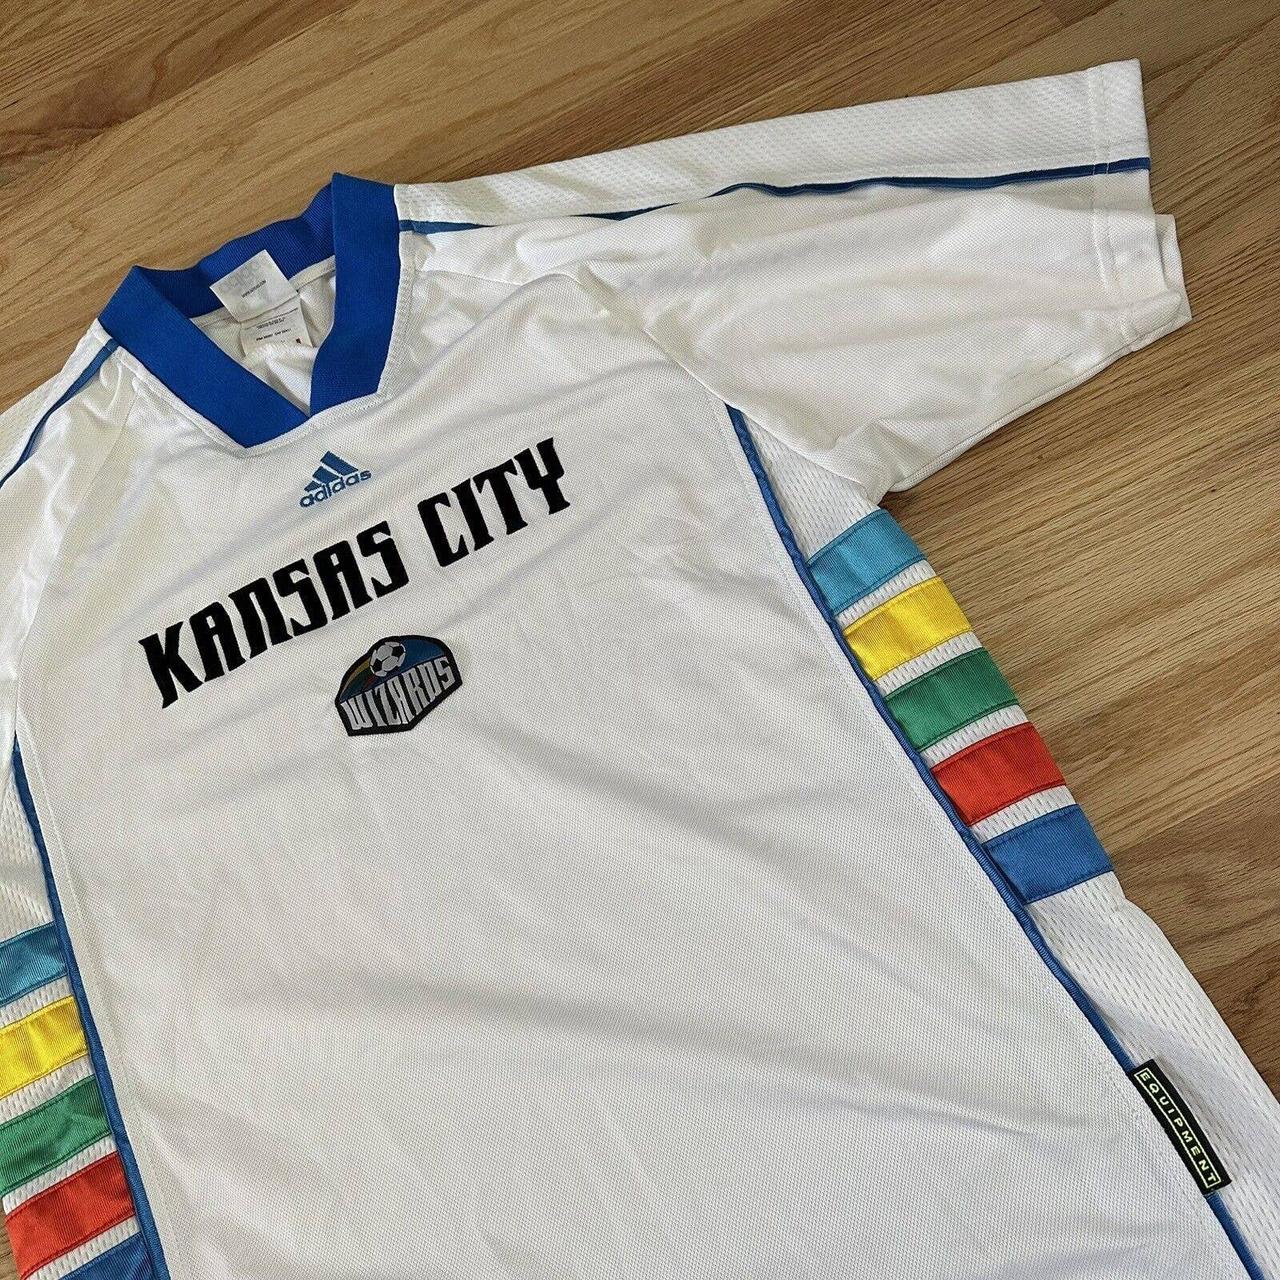 Vintage 90s Adidas Kansas City Wizards MLS Soccer Jersey Size